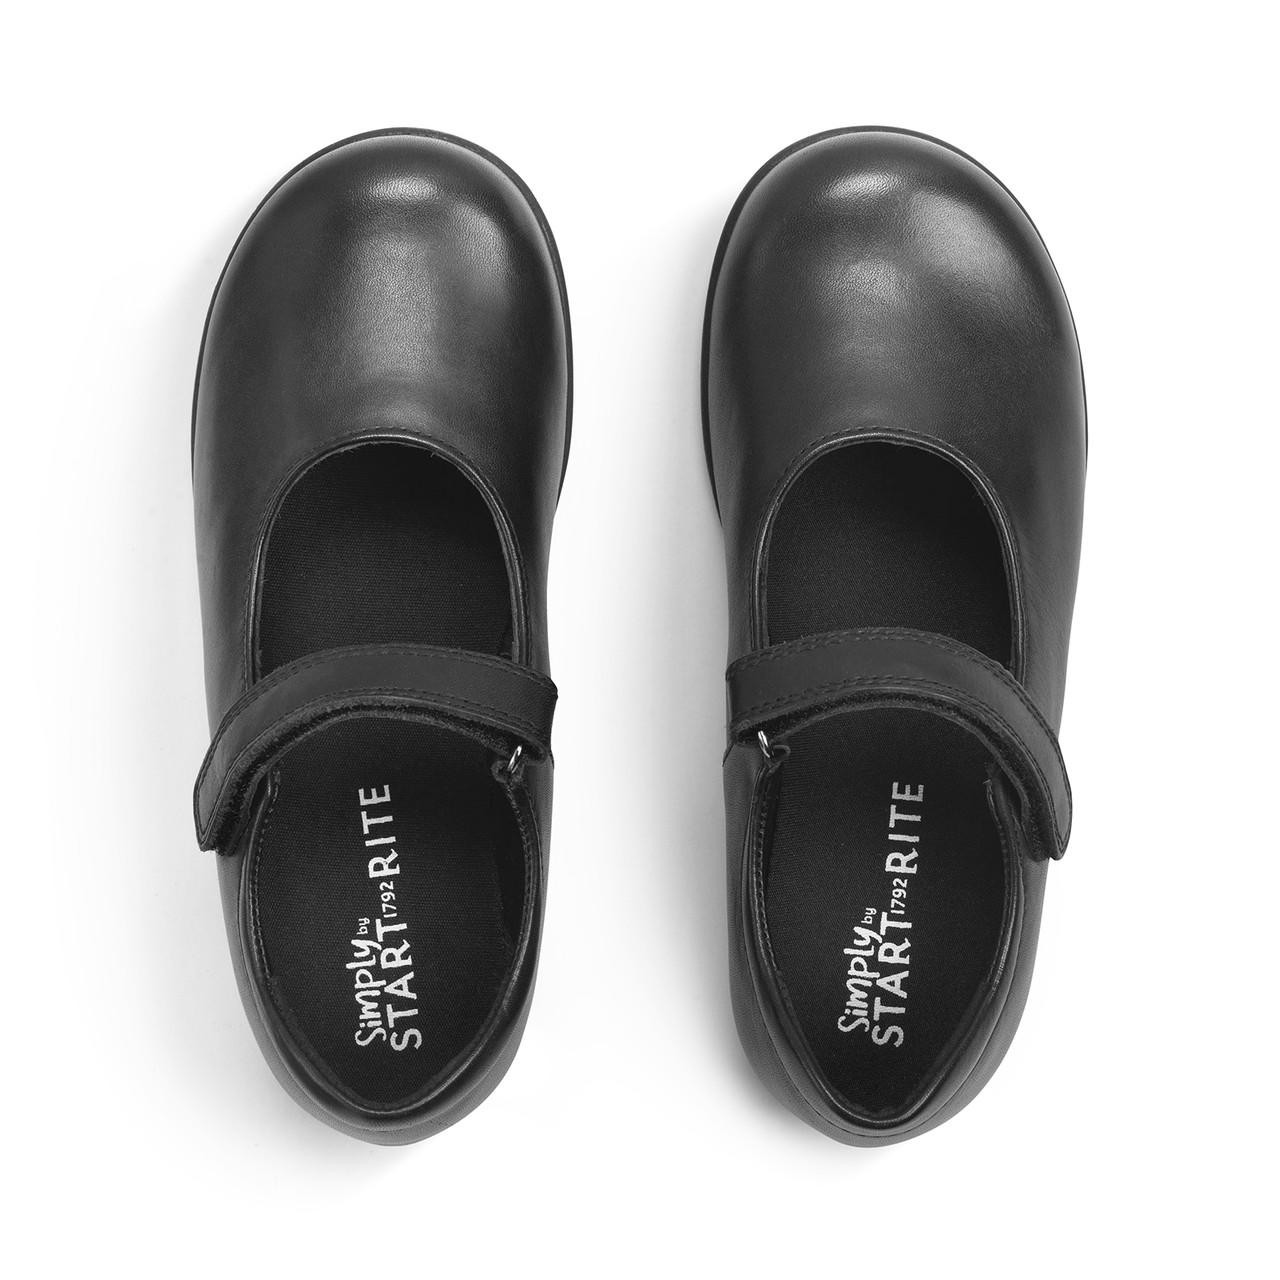 Shop Online Black School Sandals at ₹999